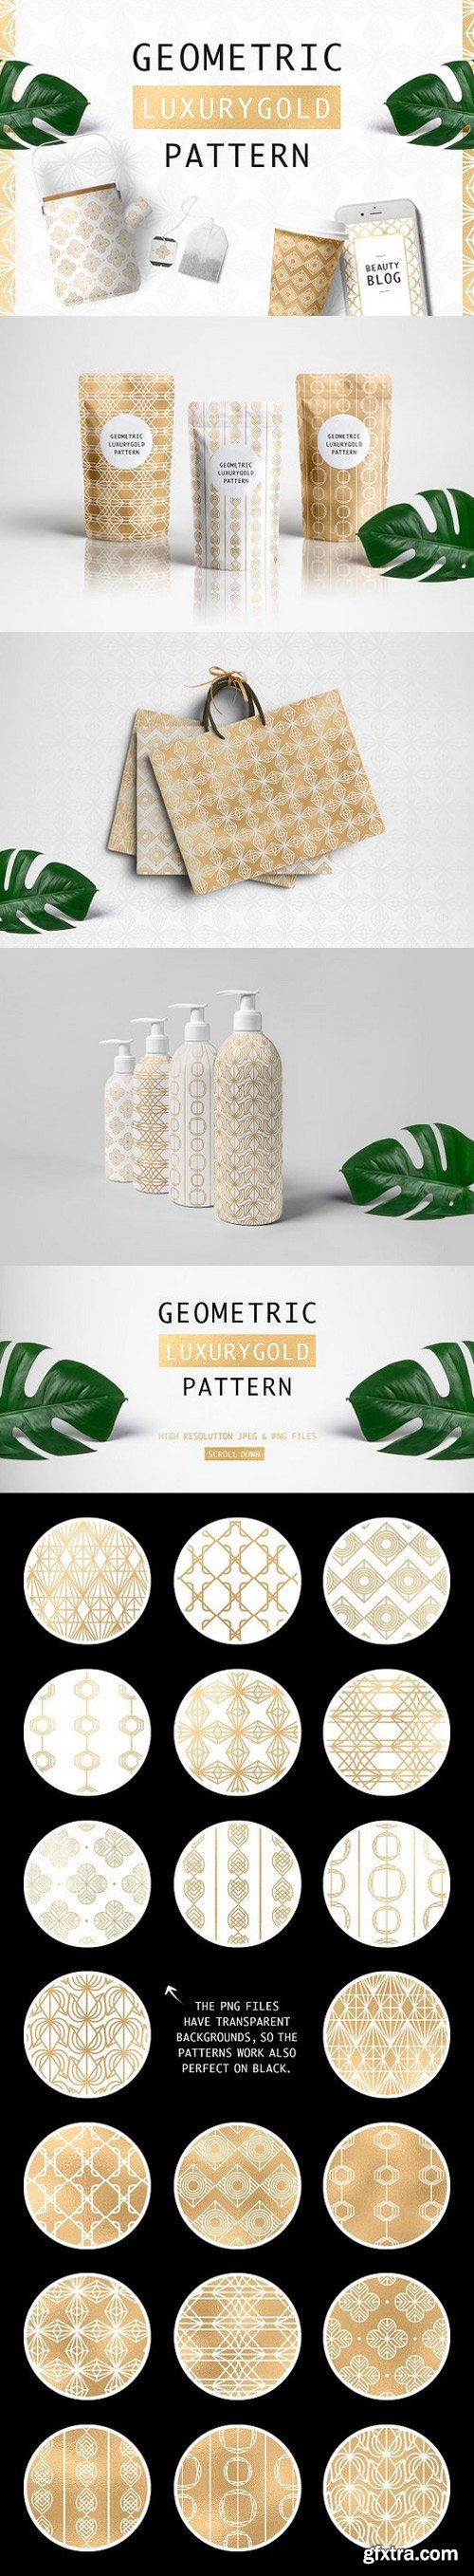 CM - Geometric Luxurygold Pattern 1526878